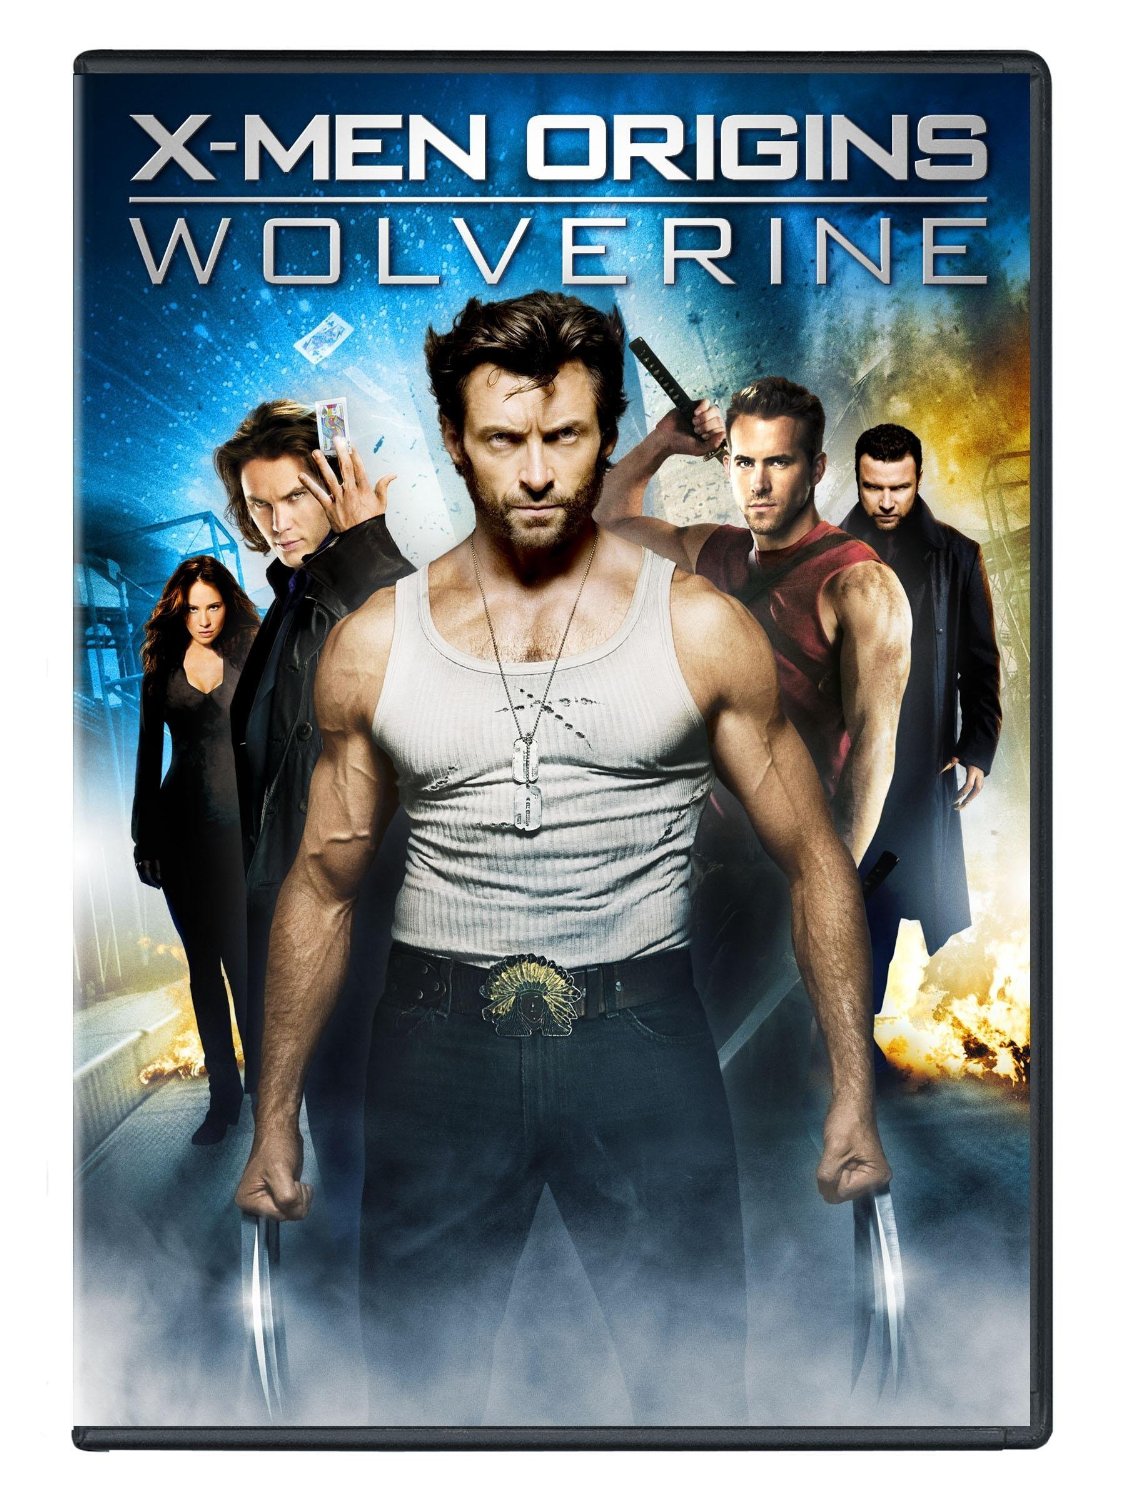 X-Men Origins: Wolverine Backgrounds on Wallpapers Vista